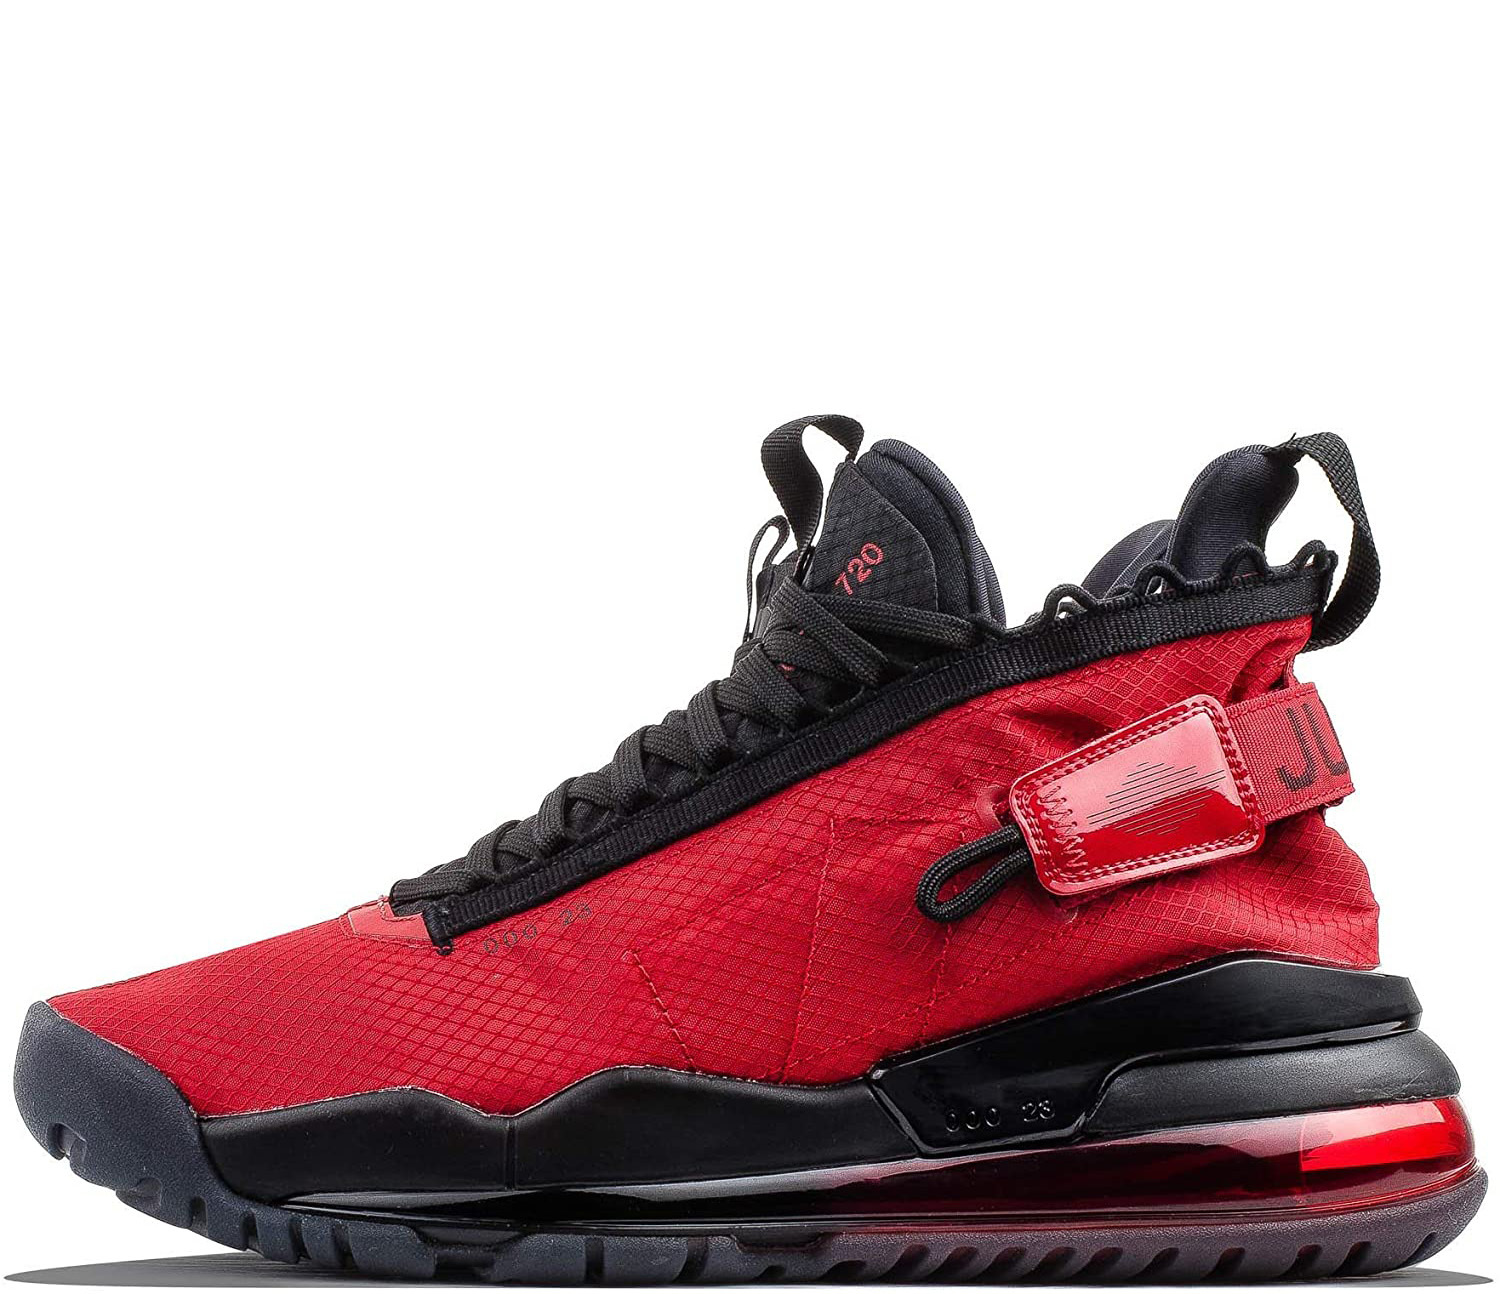 Кроссовки Nike Air Jordan Proto Max 720 Red/Black